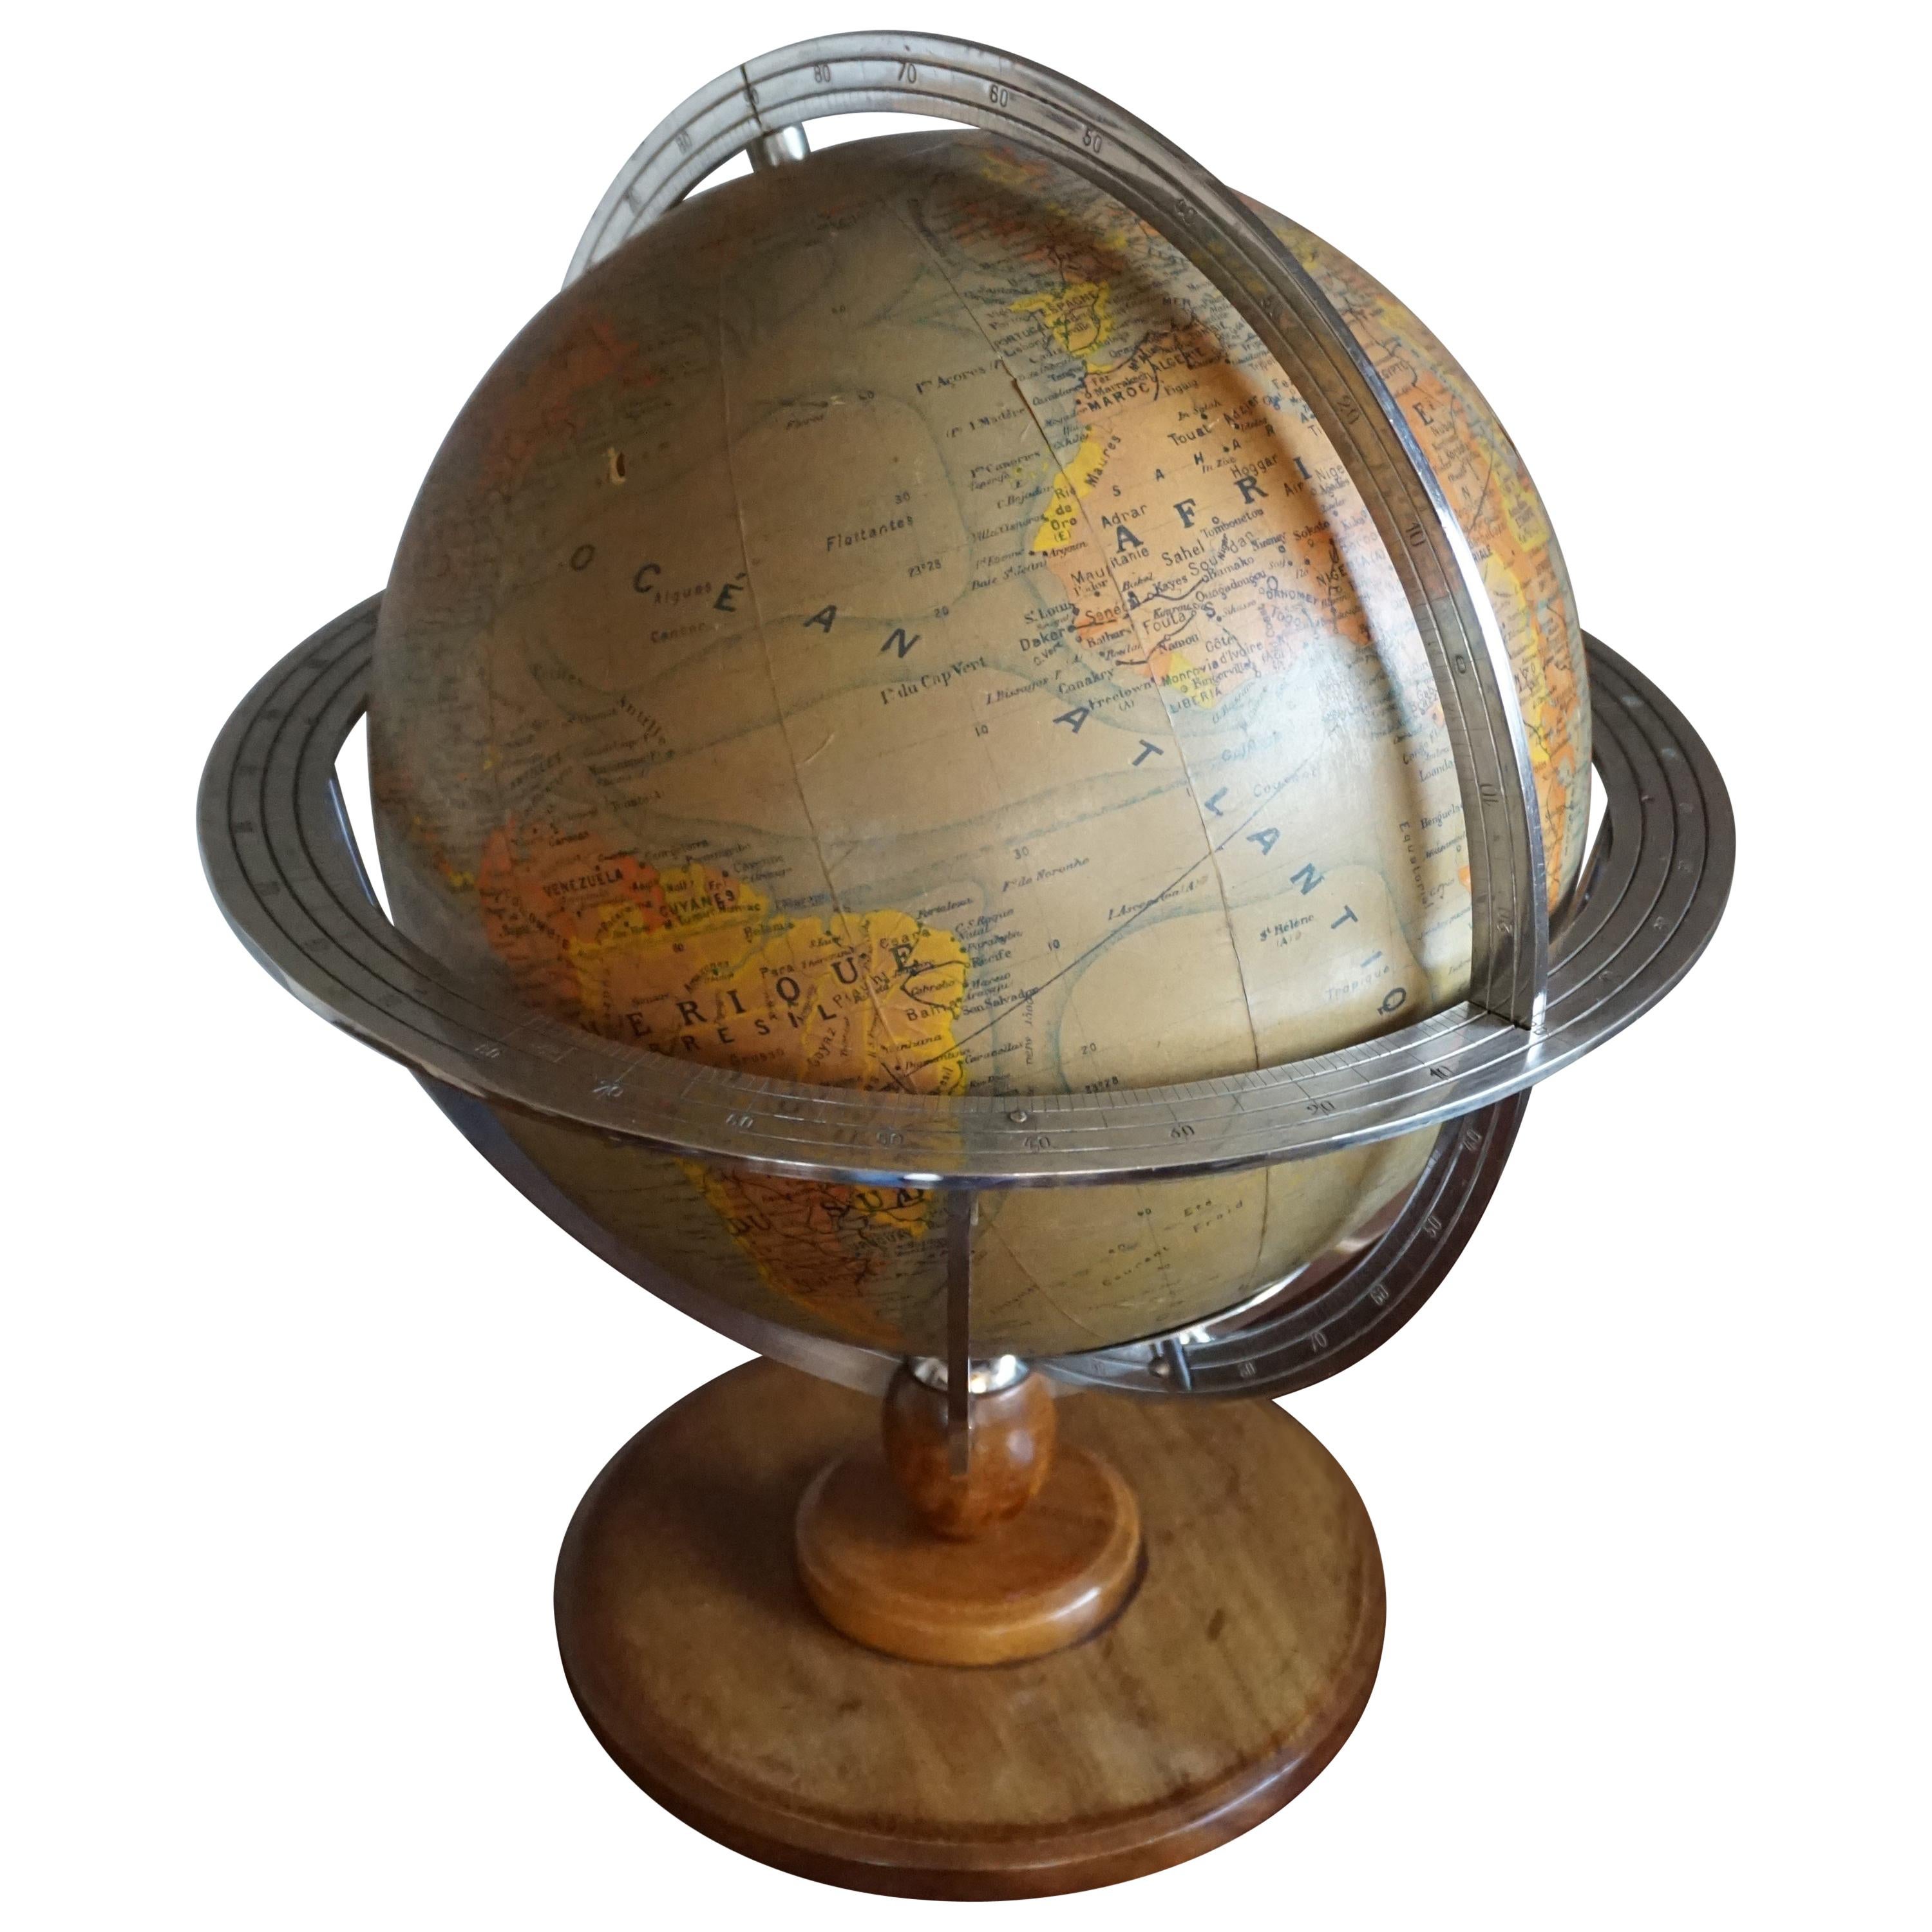 Stylish Mid-20th Century Made, Parisian Terrestrial Desk / Table Globe with Lamp